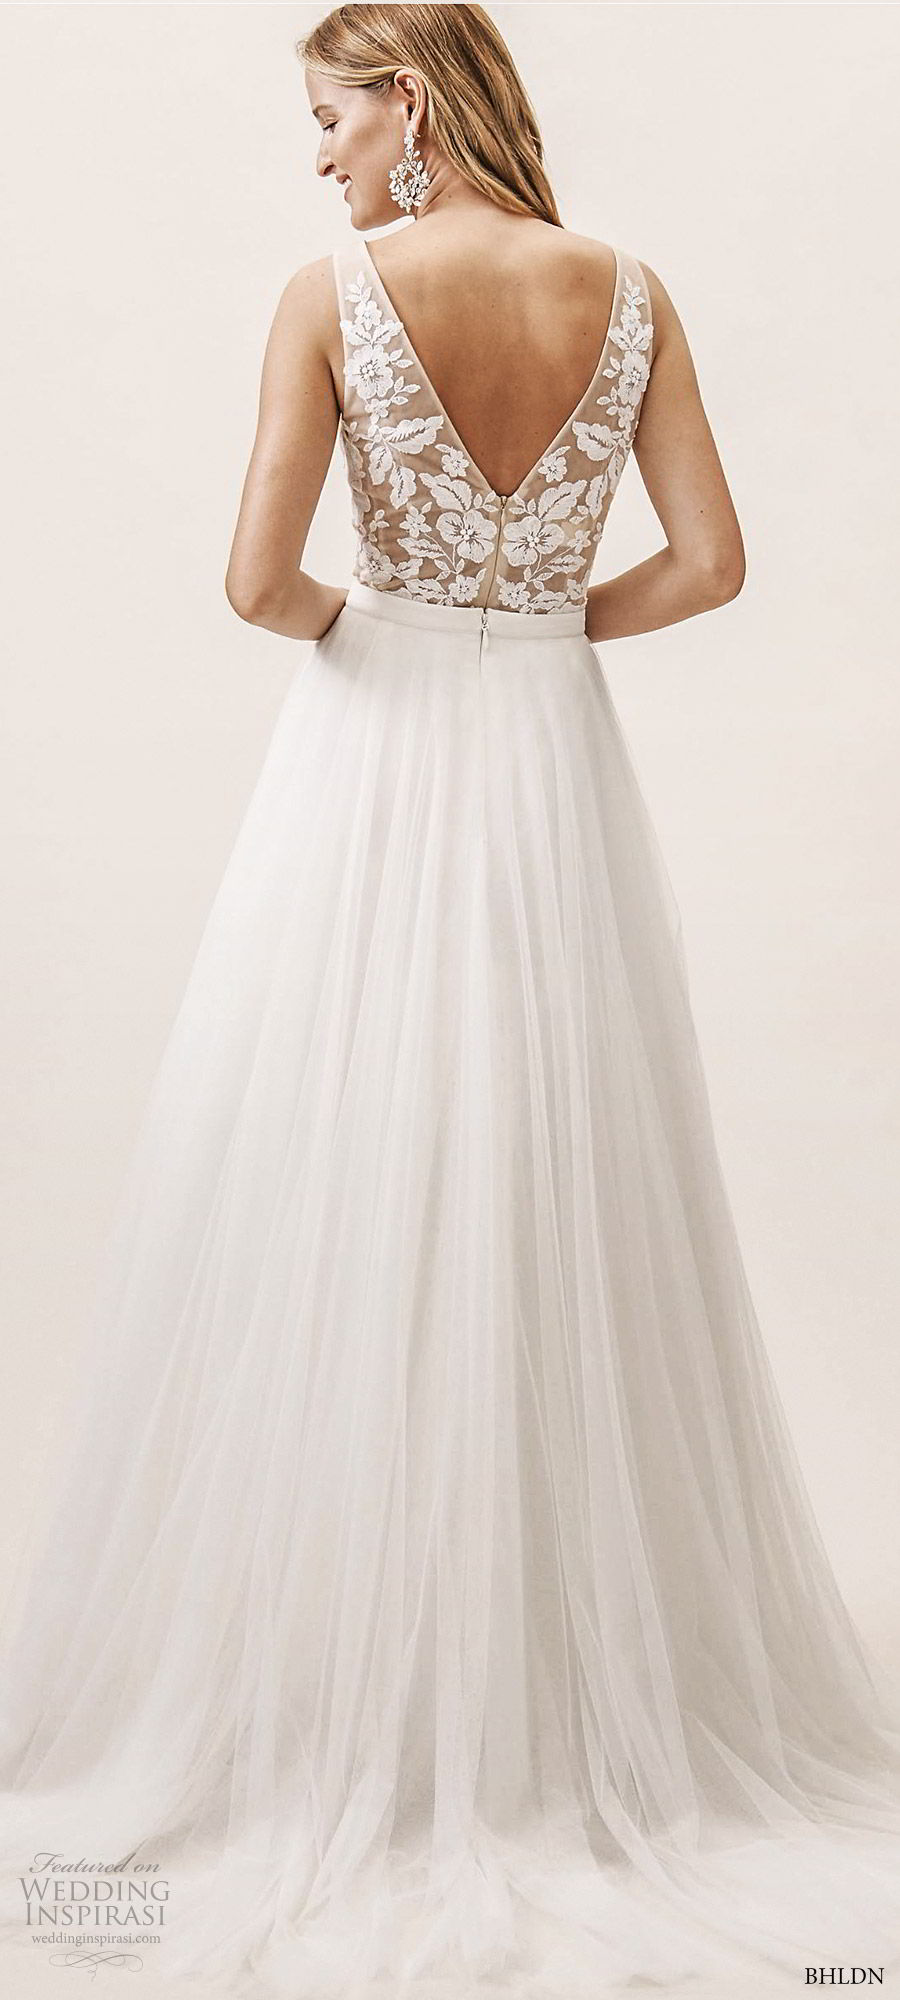 bhldn spring 2019 bridal sleeveless illusion deep v neck sheer lace top a line ball gown skirt 2 piece wedding dress (11) modern romantic bv